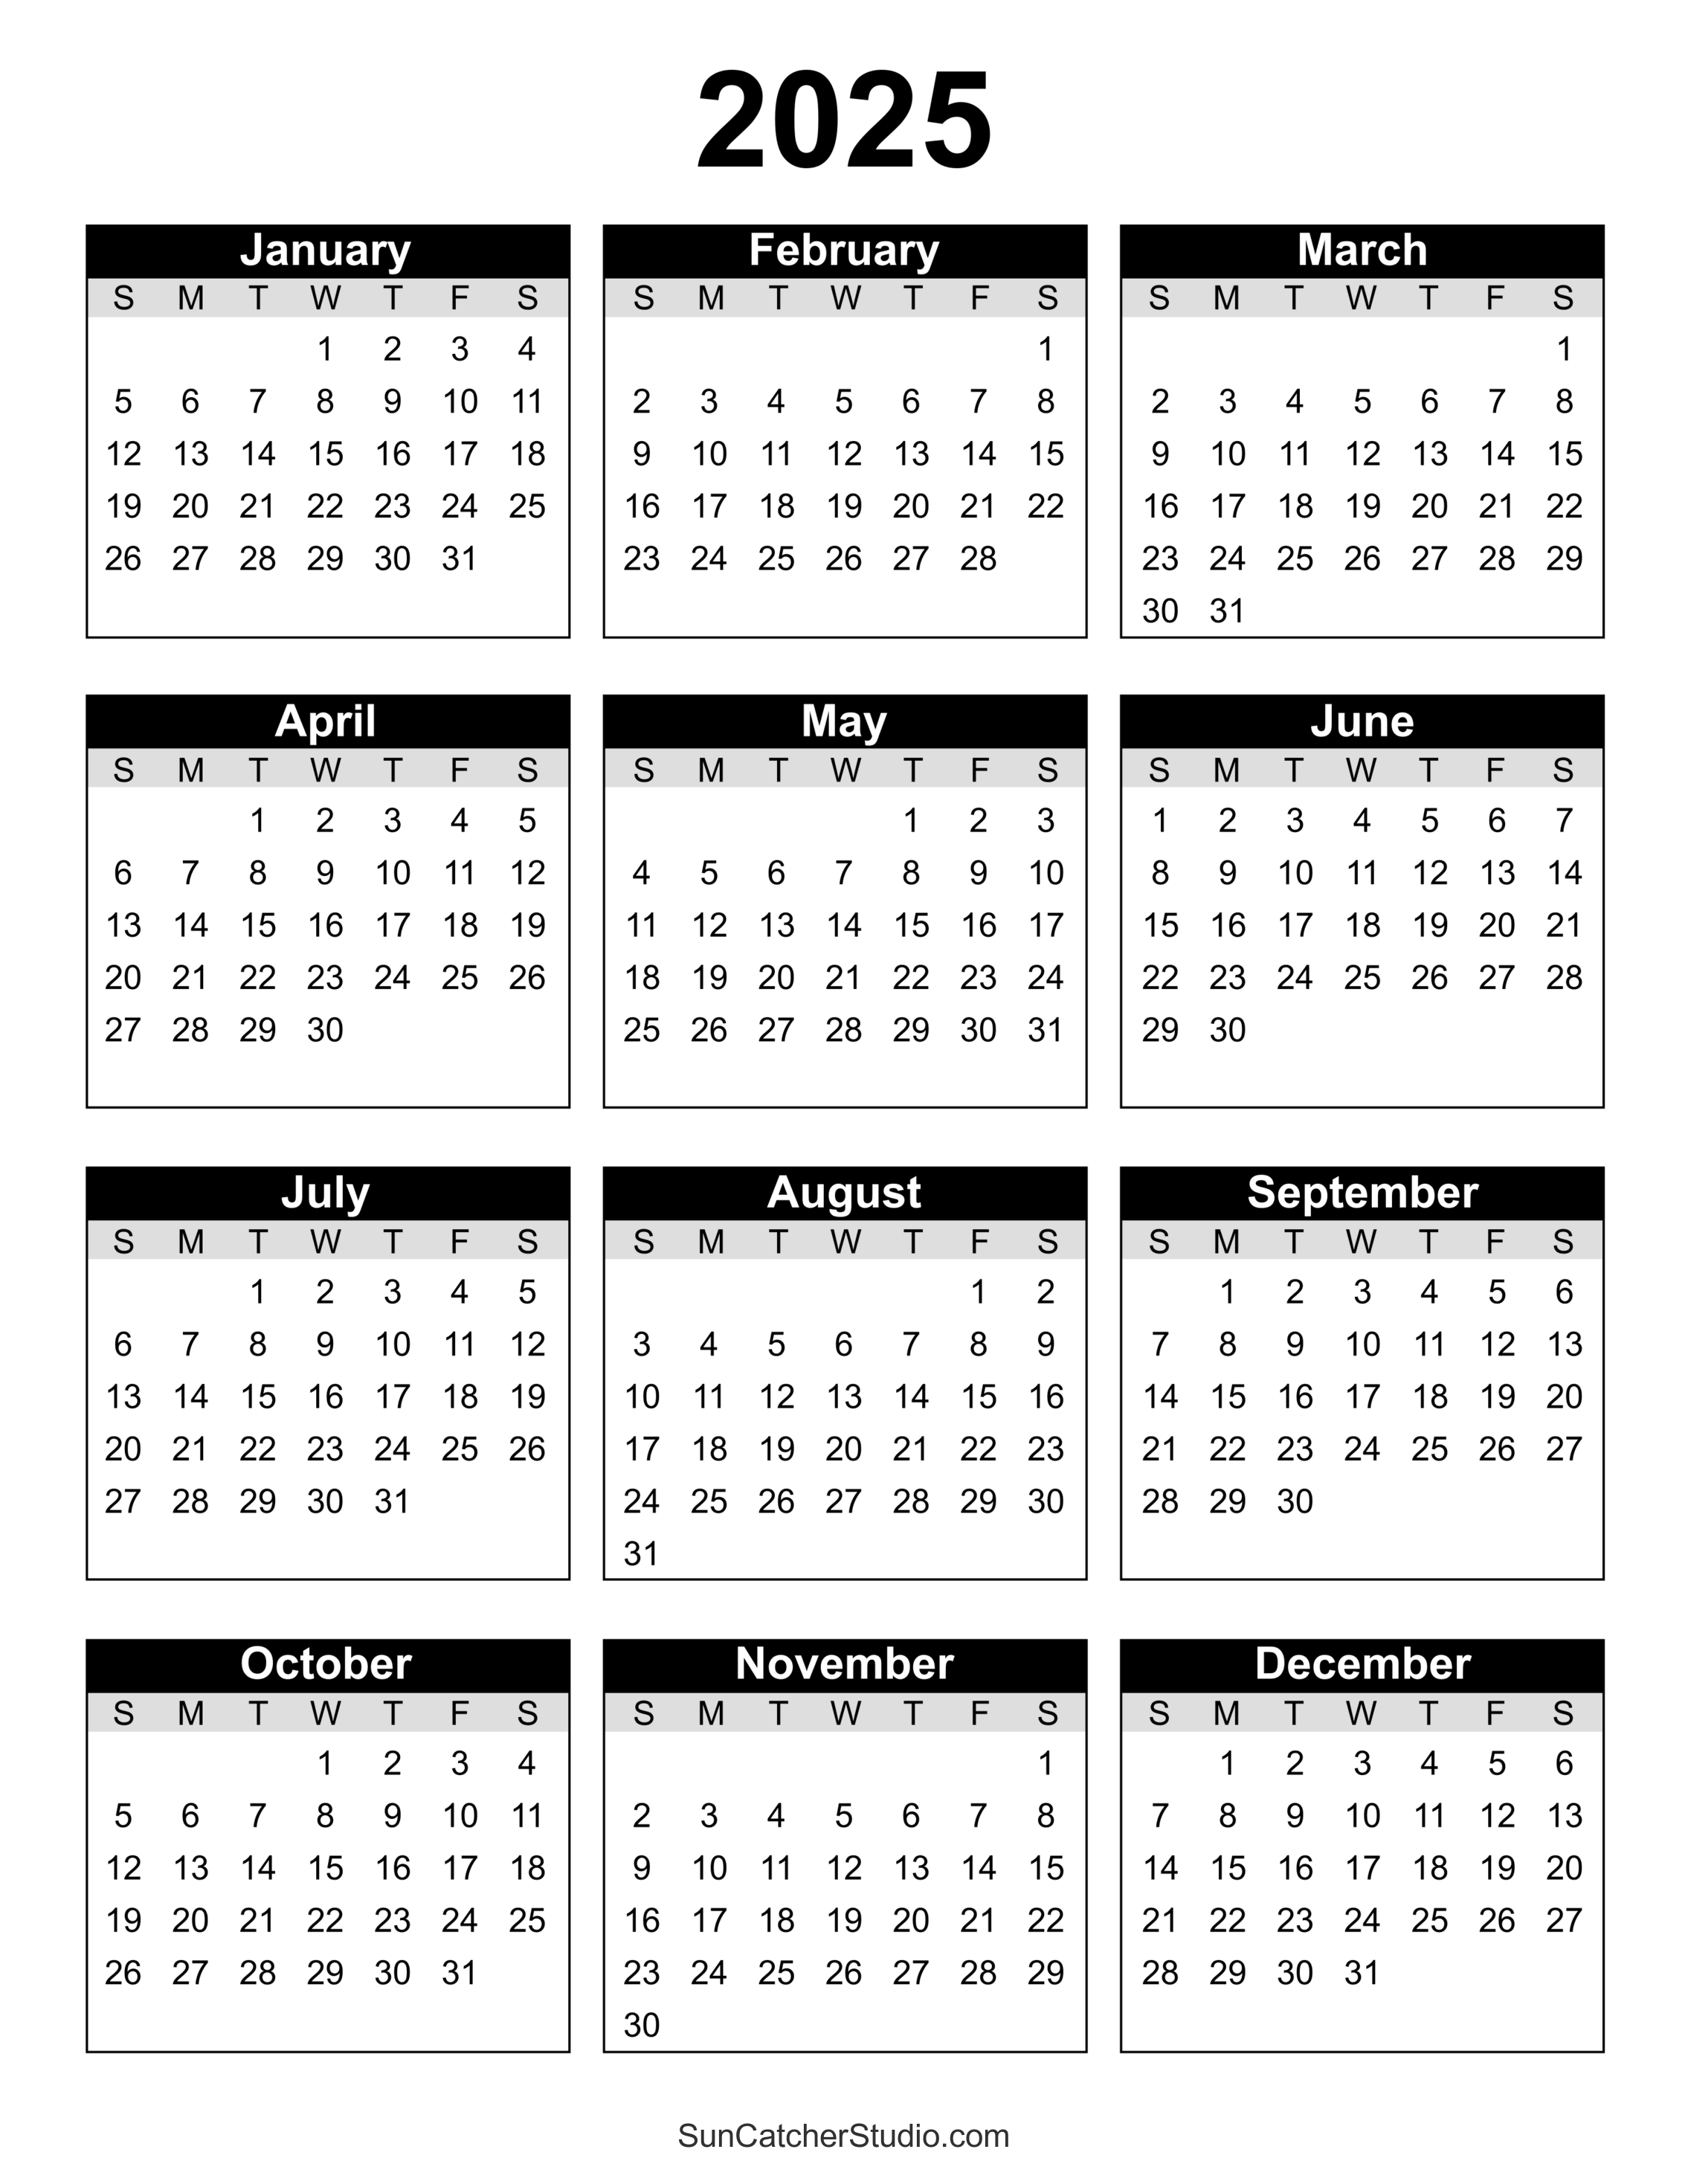 basis-prescott-calendar